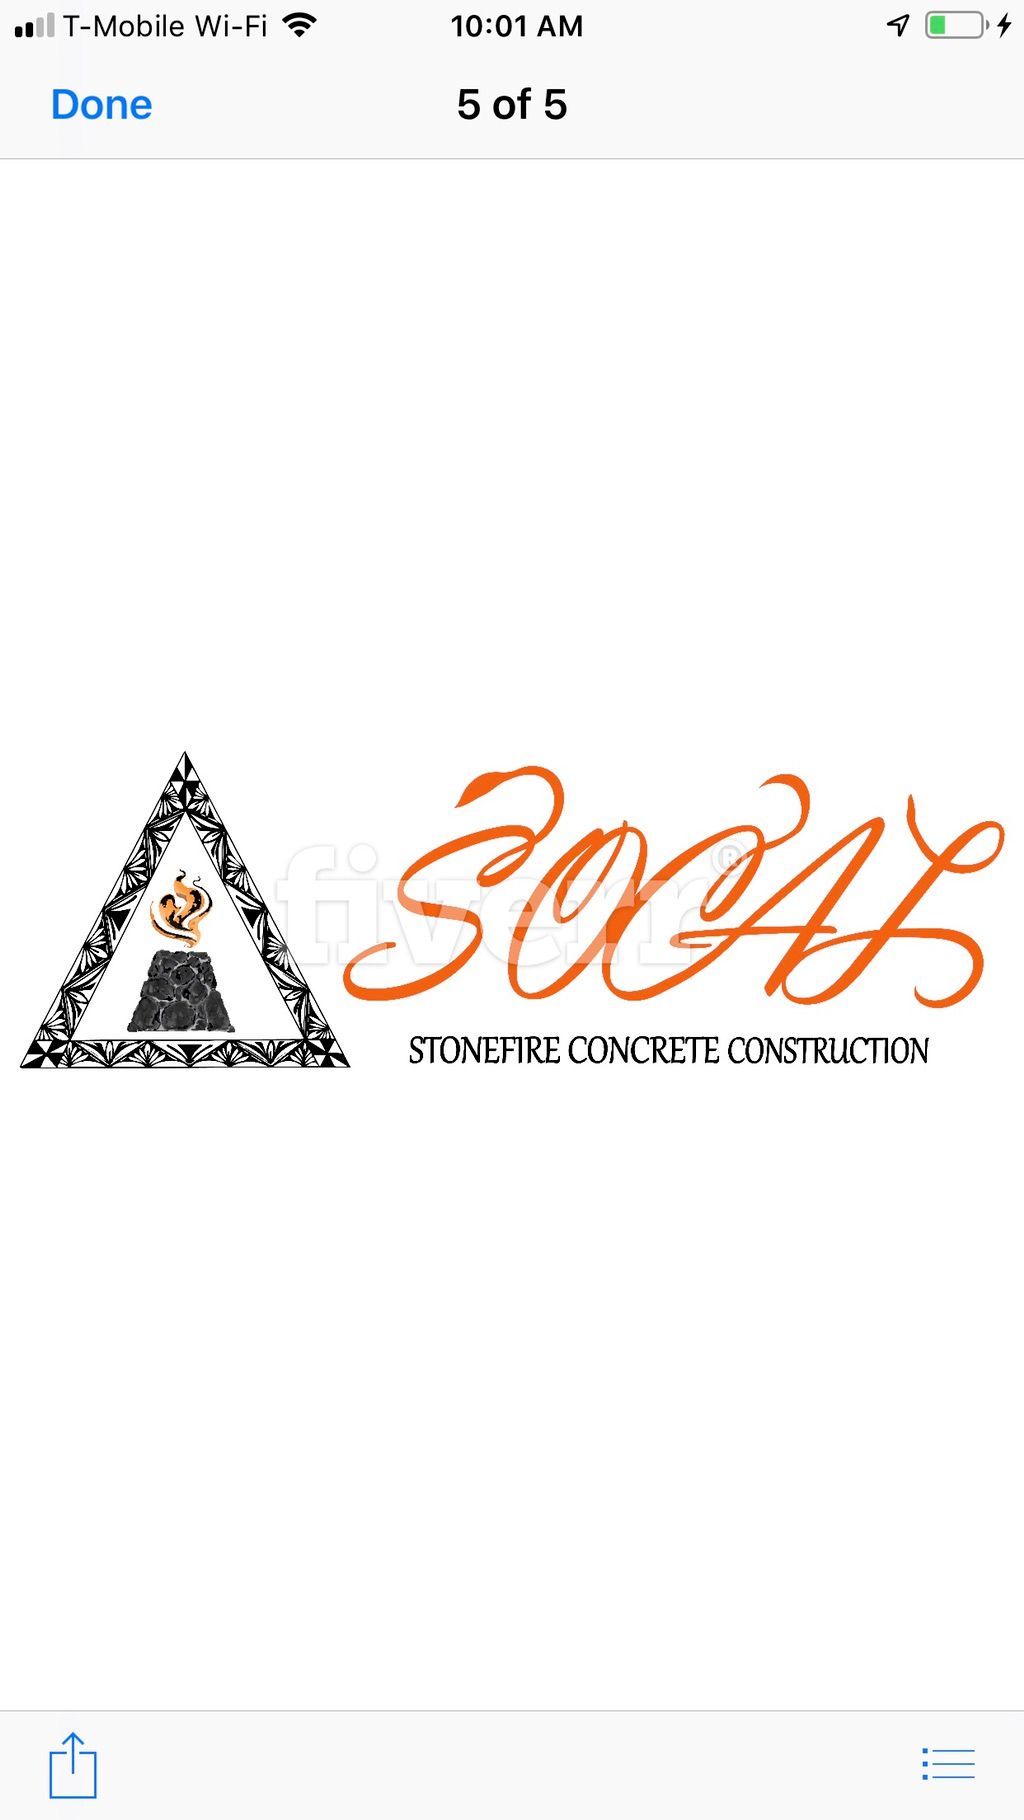 SoCal Stonefire Concrete Construction